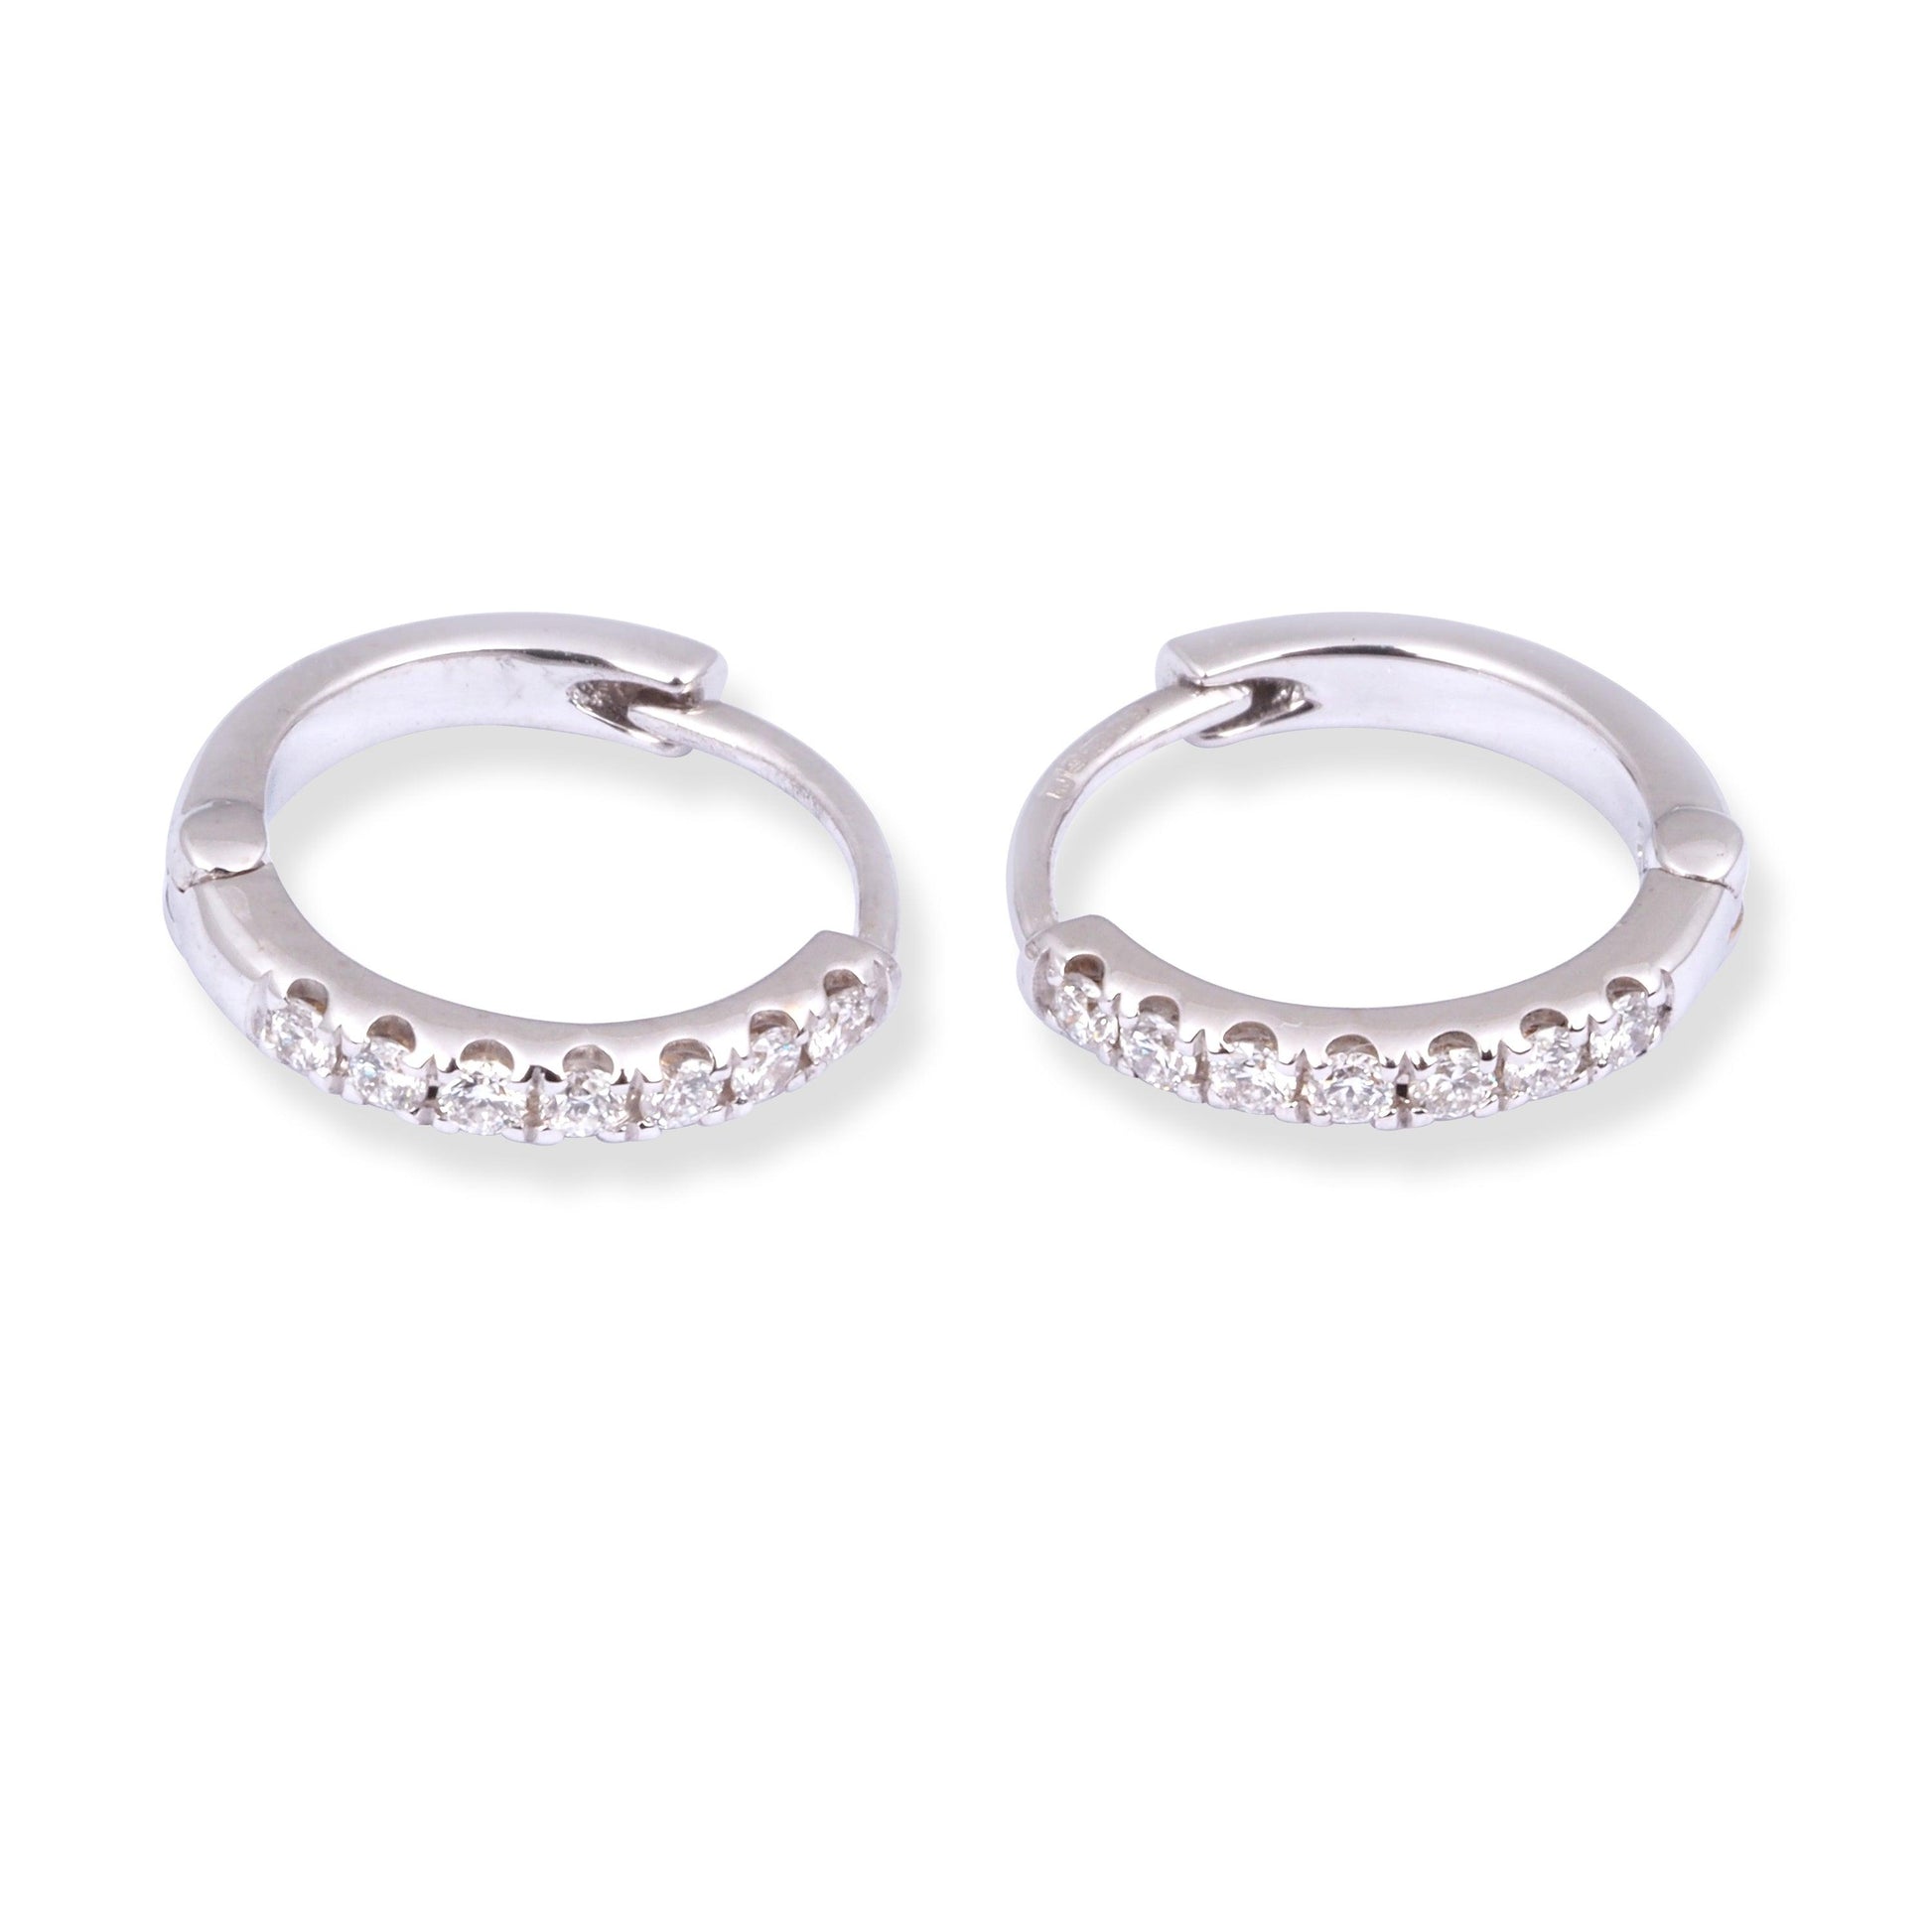 18ct White Gold Huggie Hoop Diamond Earrings E-8001 - Minar Jewellers